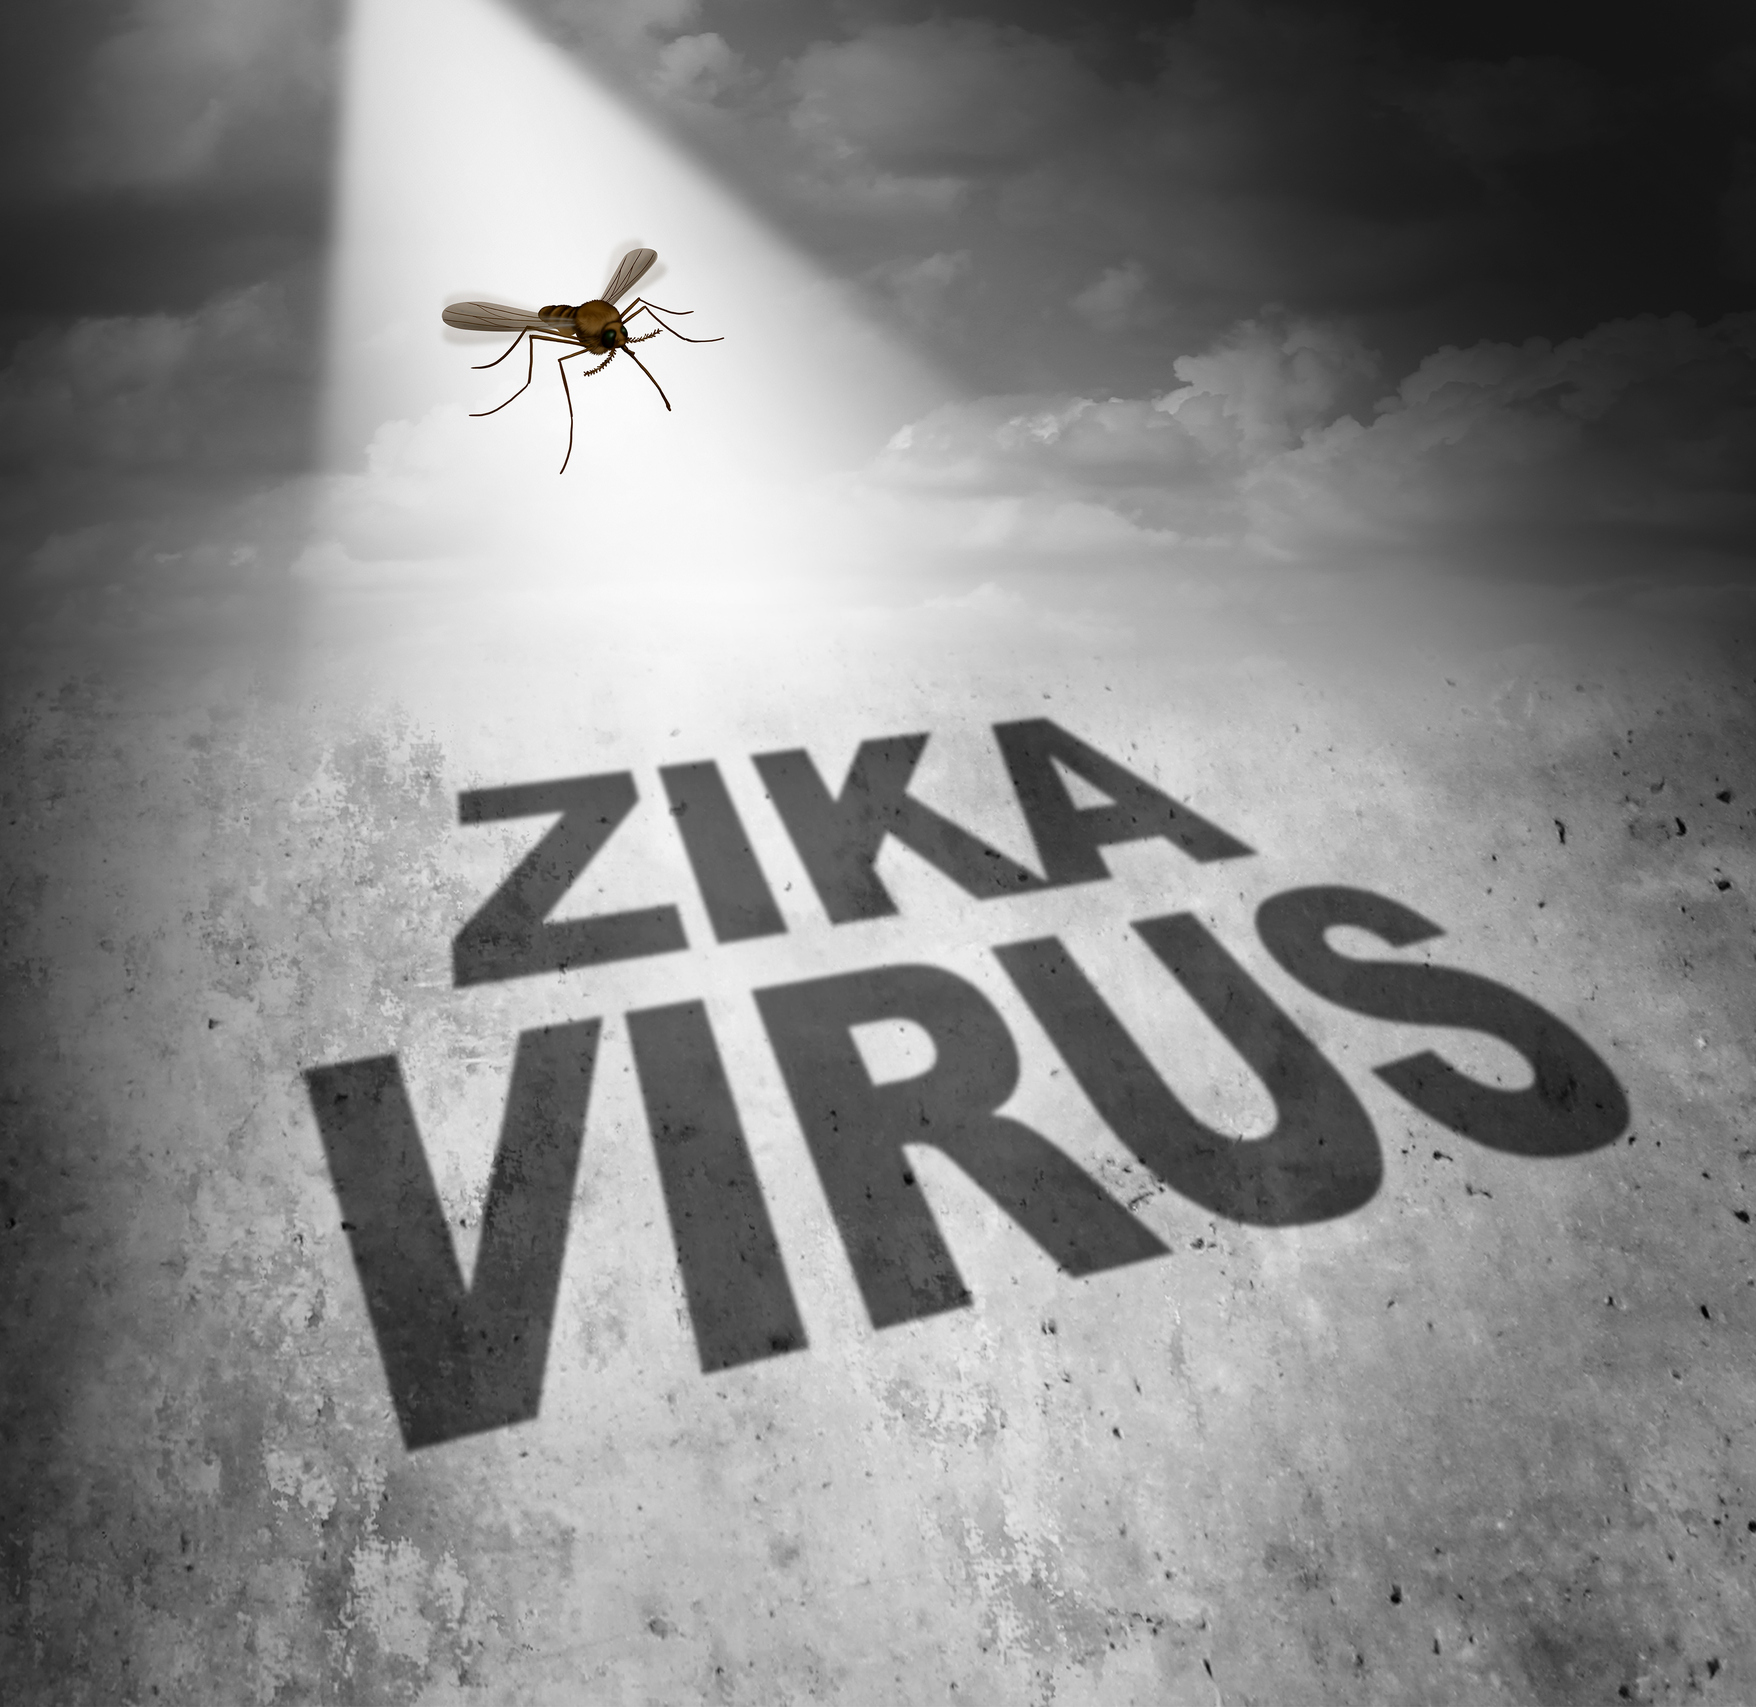 Zika virus scares